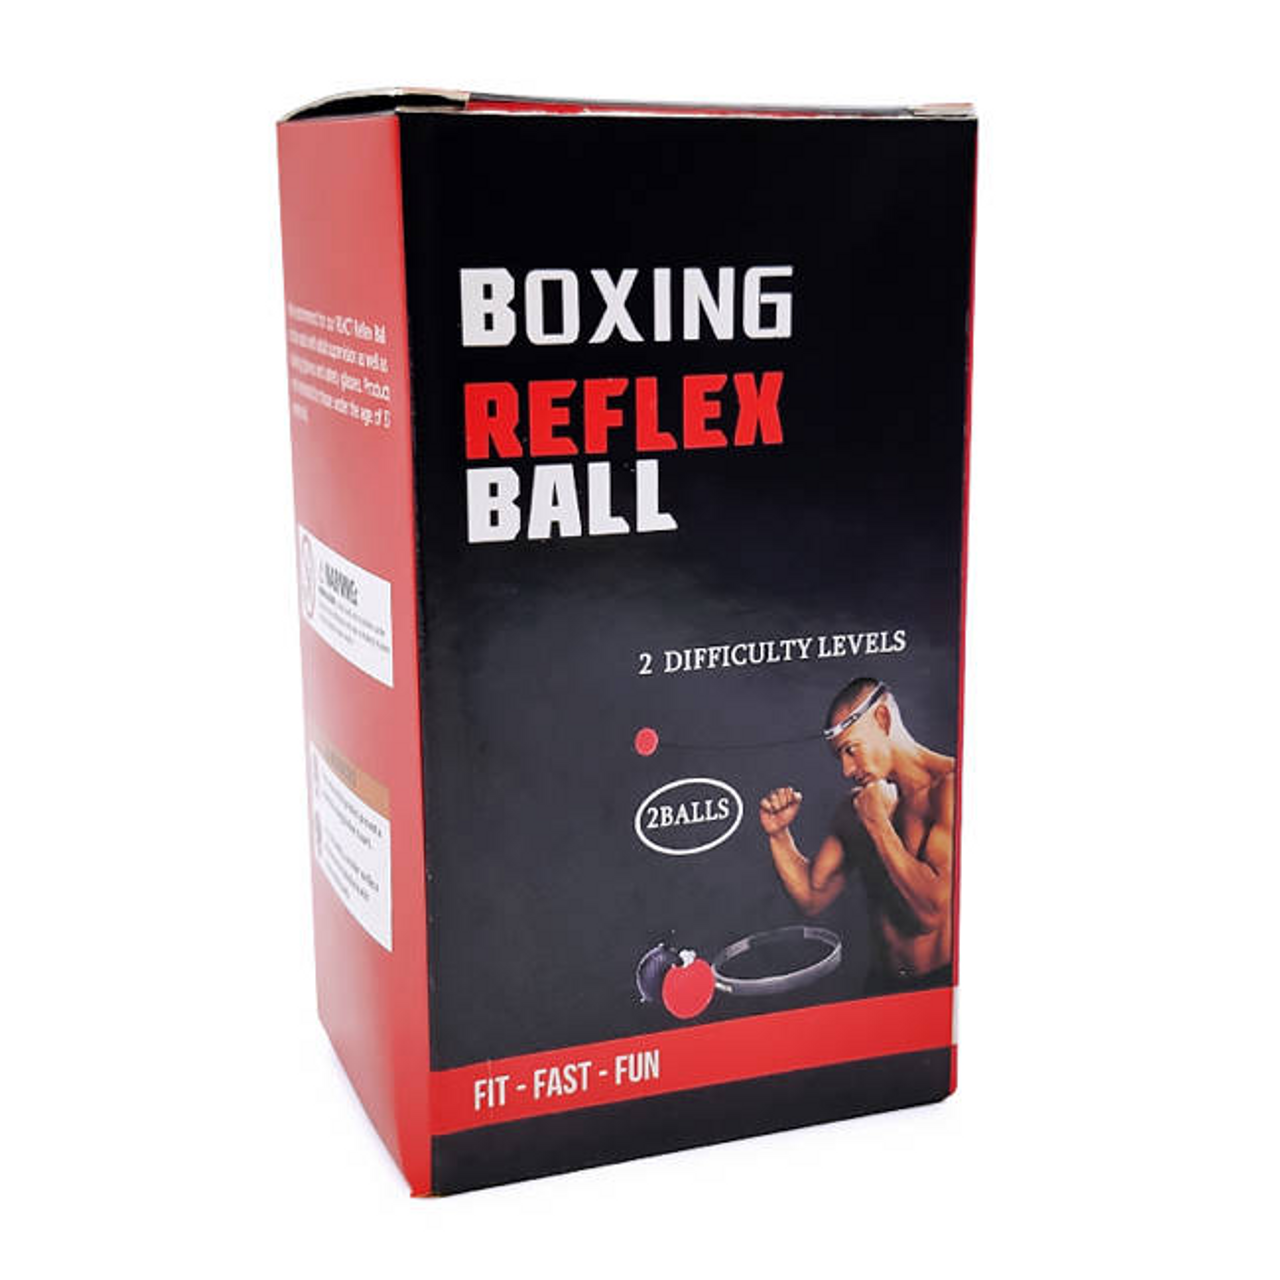 TEKXYZ Boxing Reflex Ball - 2 Difficulty Levels